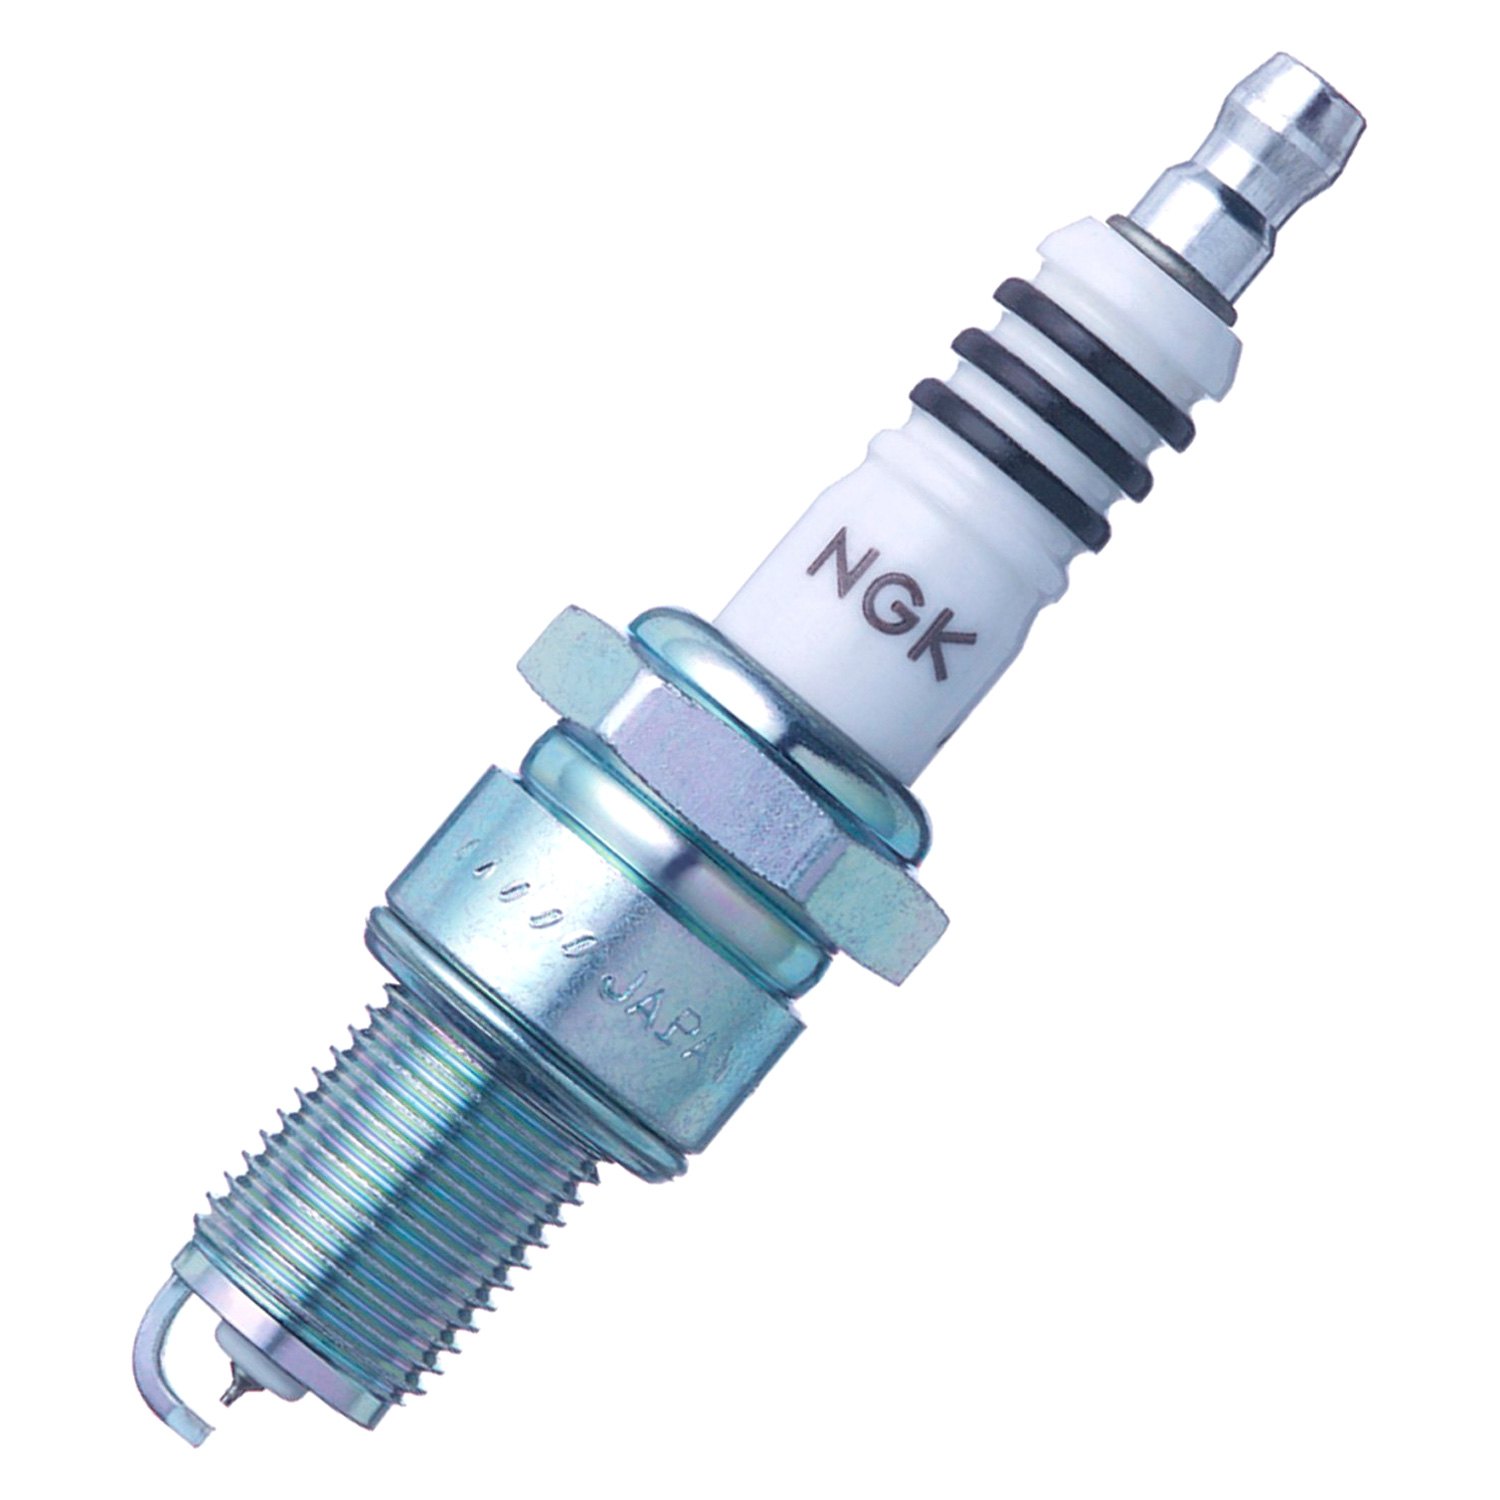 NGK NGK-SP-6597-BY2 Iridium Spark Plug